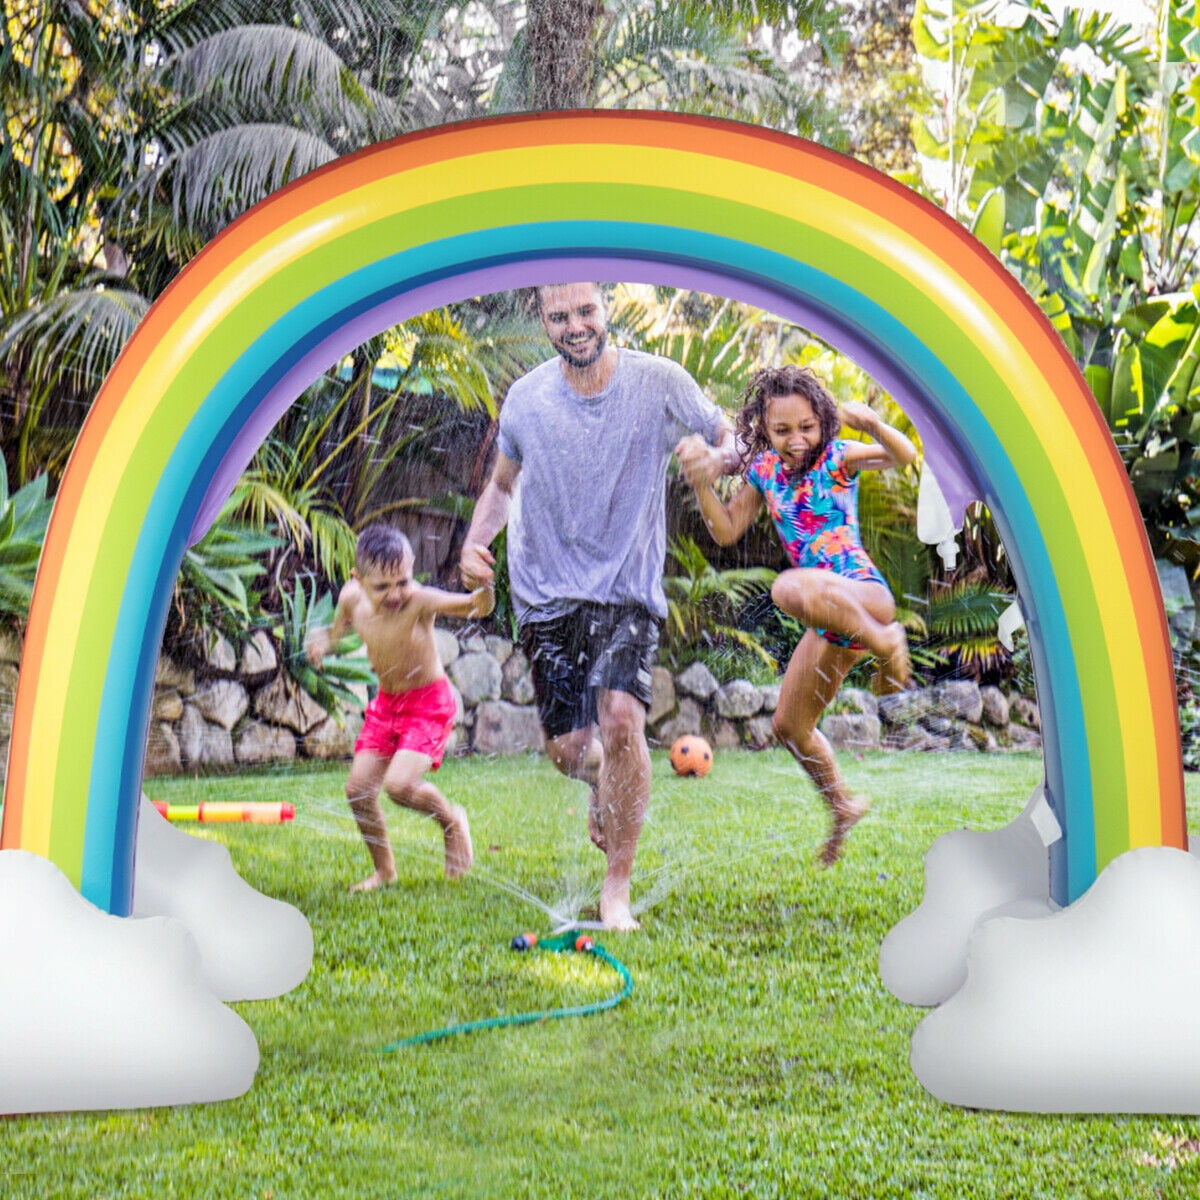 Inflatable Rainbow Sprinkler Backyard Games Summer Outdoor Water Toy Yard Fun 